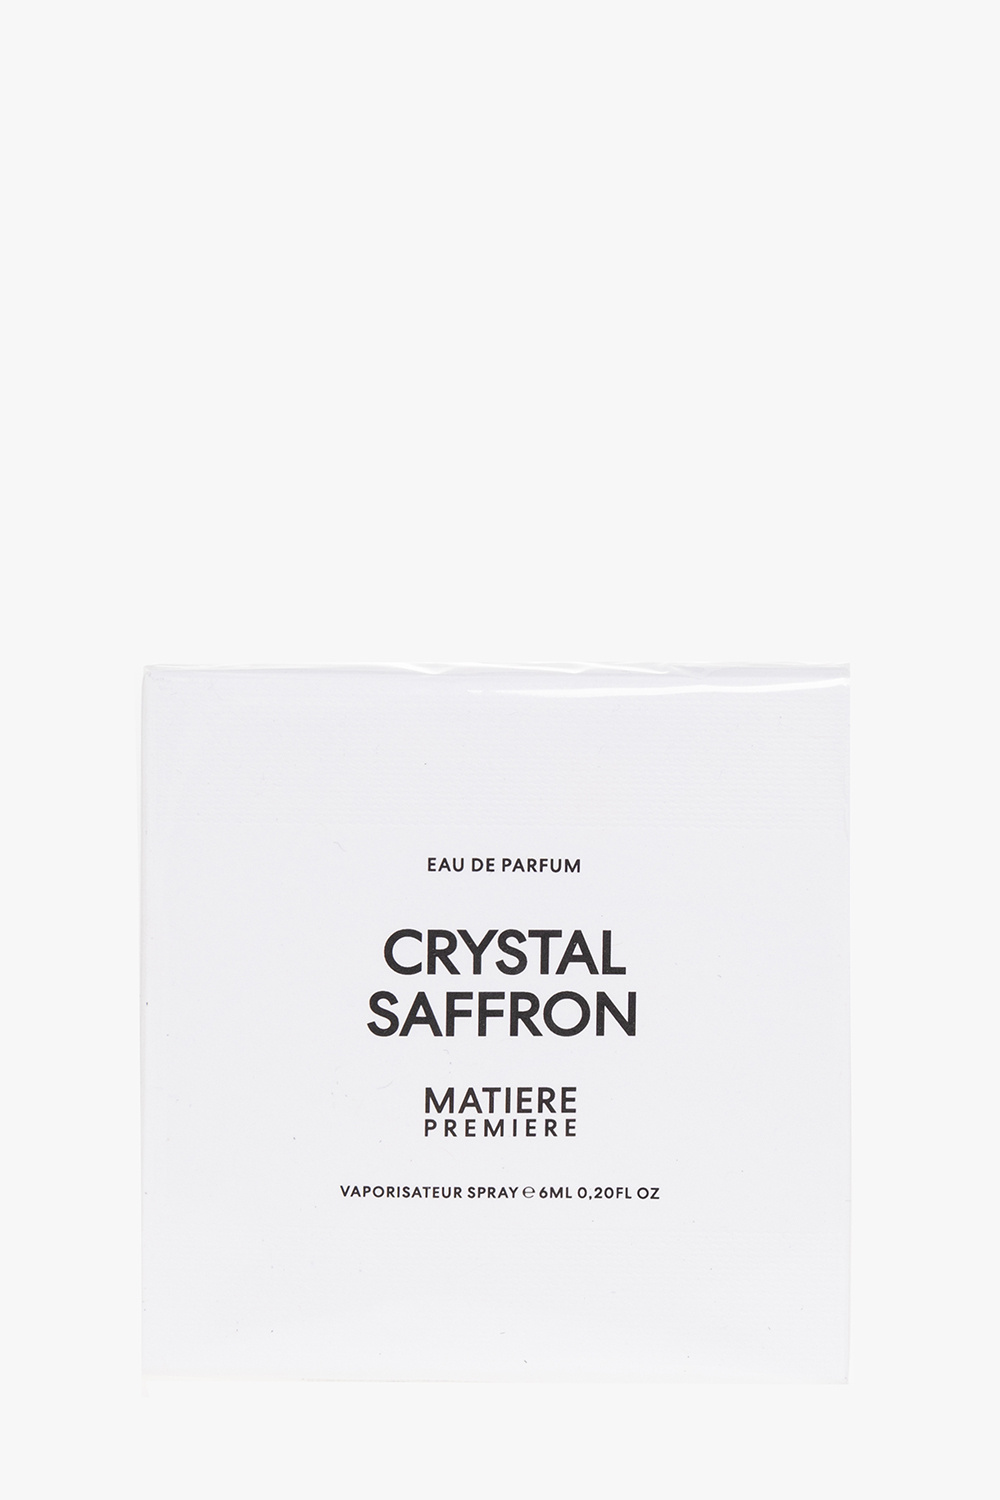 Crystal Saffron Matiere Premiere perfume a new fragrance